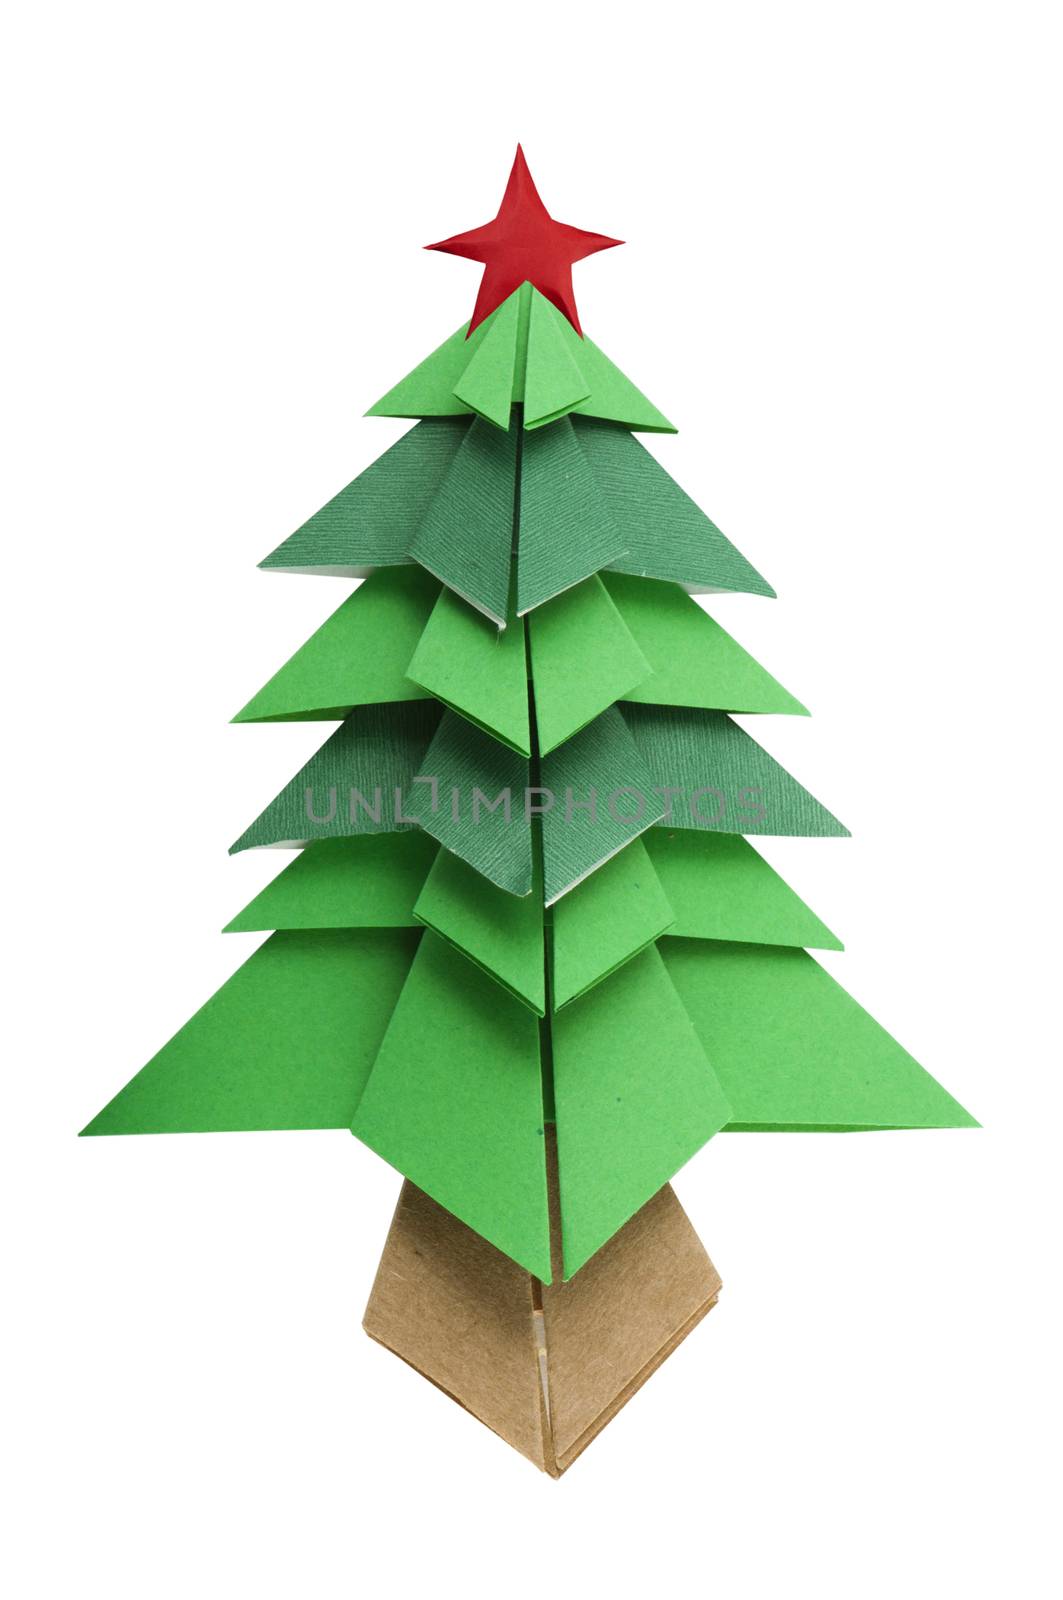 Christmas tree white isolated origami